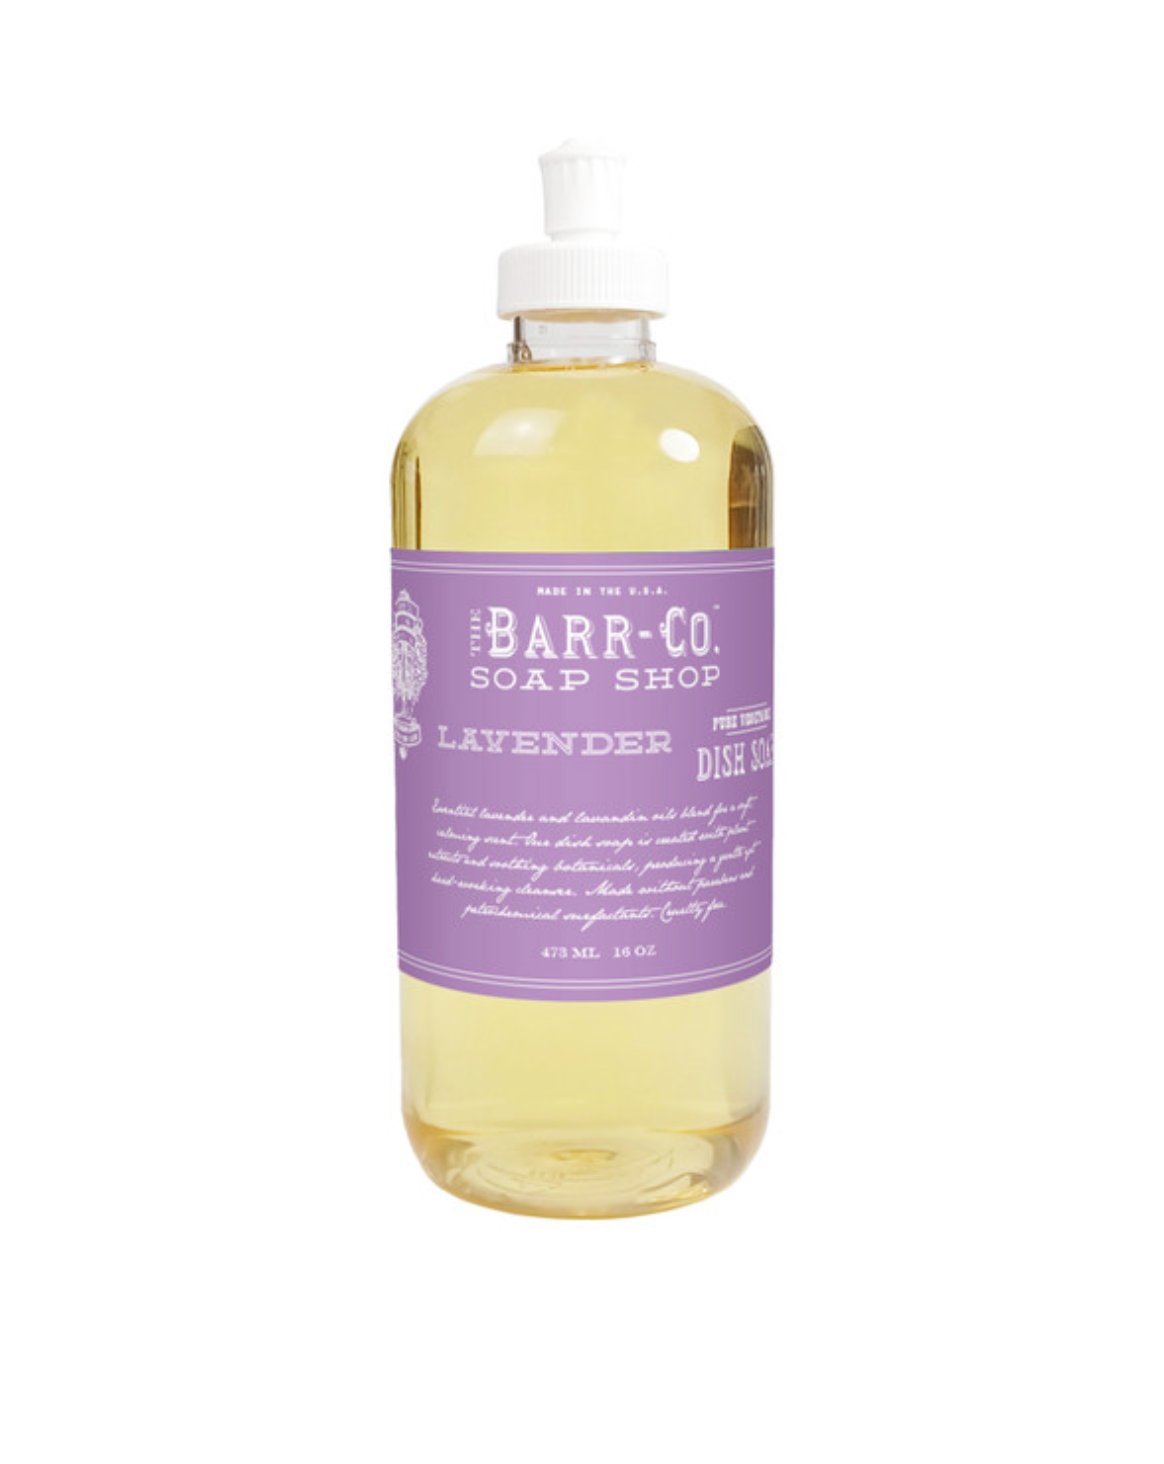 BARR-CO. LAVENDER DISH SOAP